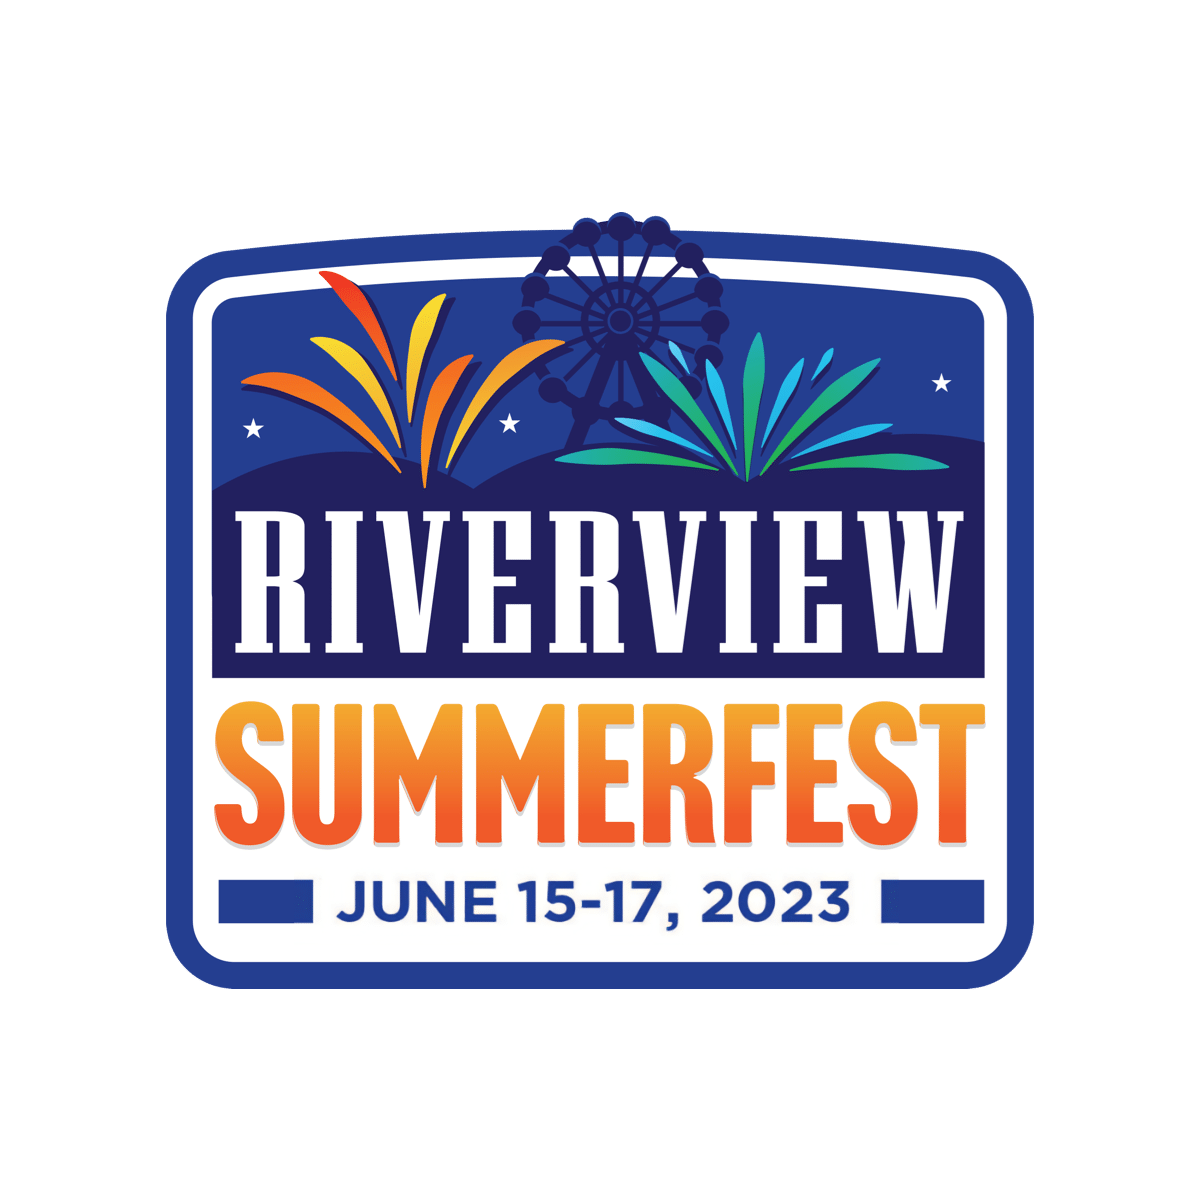 Riverview Summerfest June 15-17 2023 logo